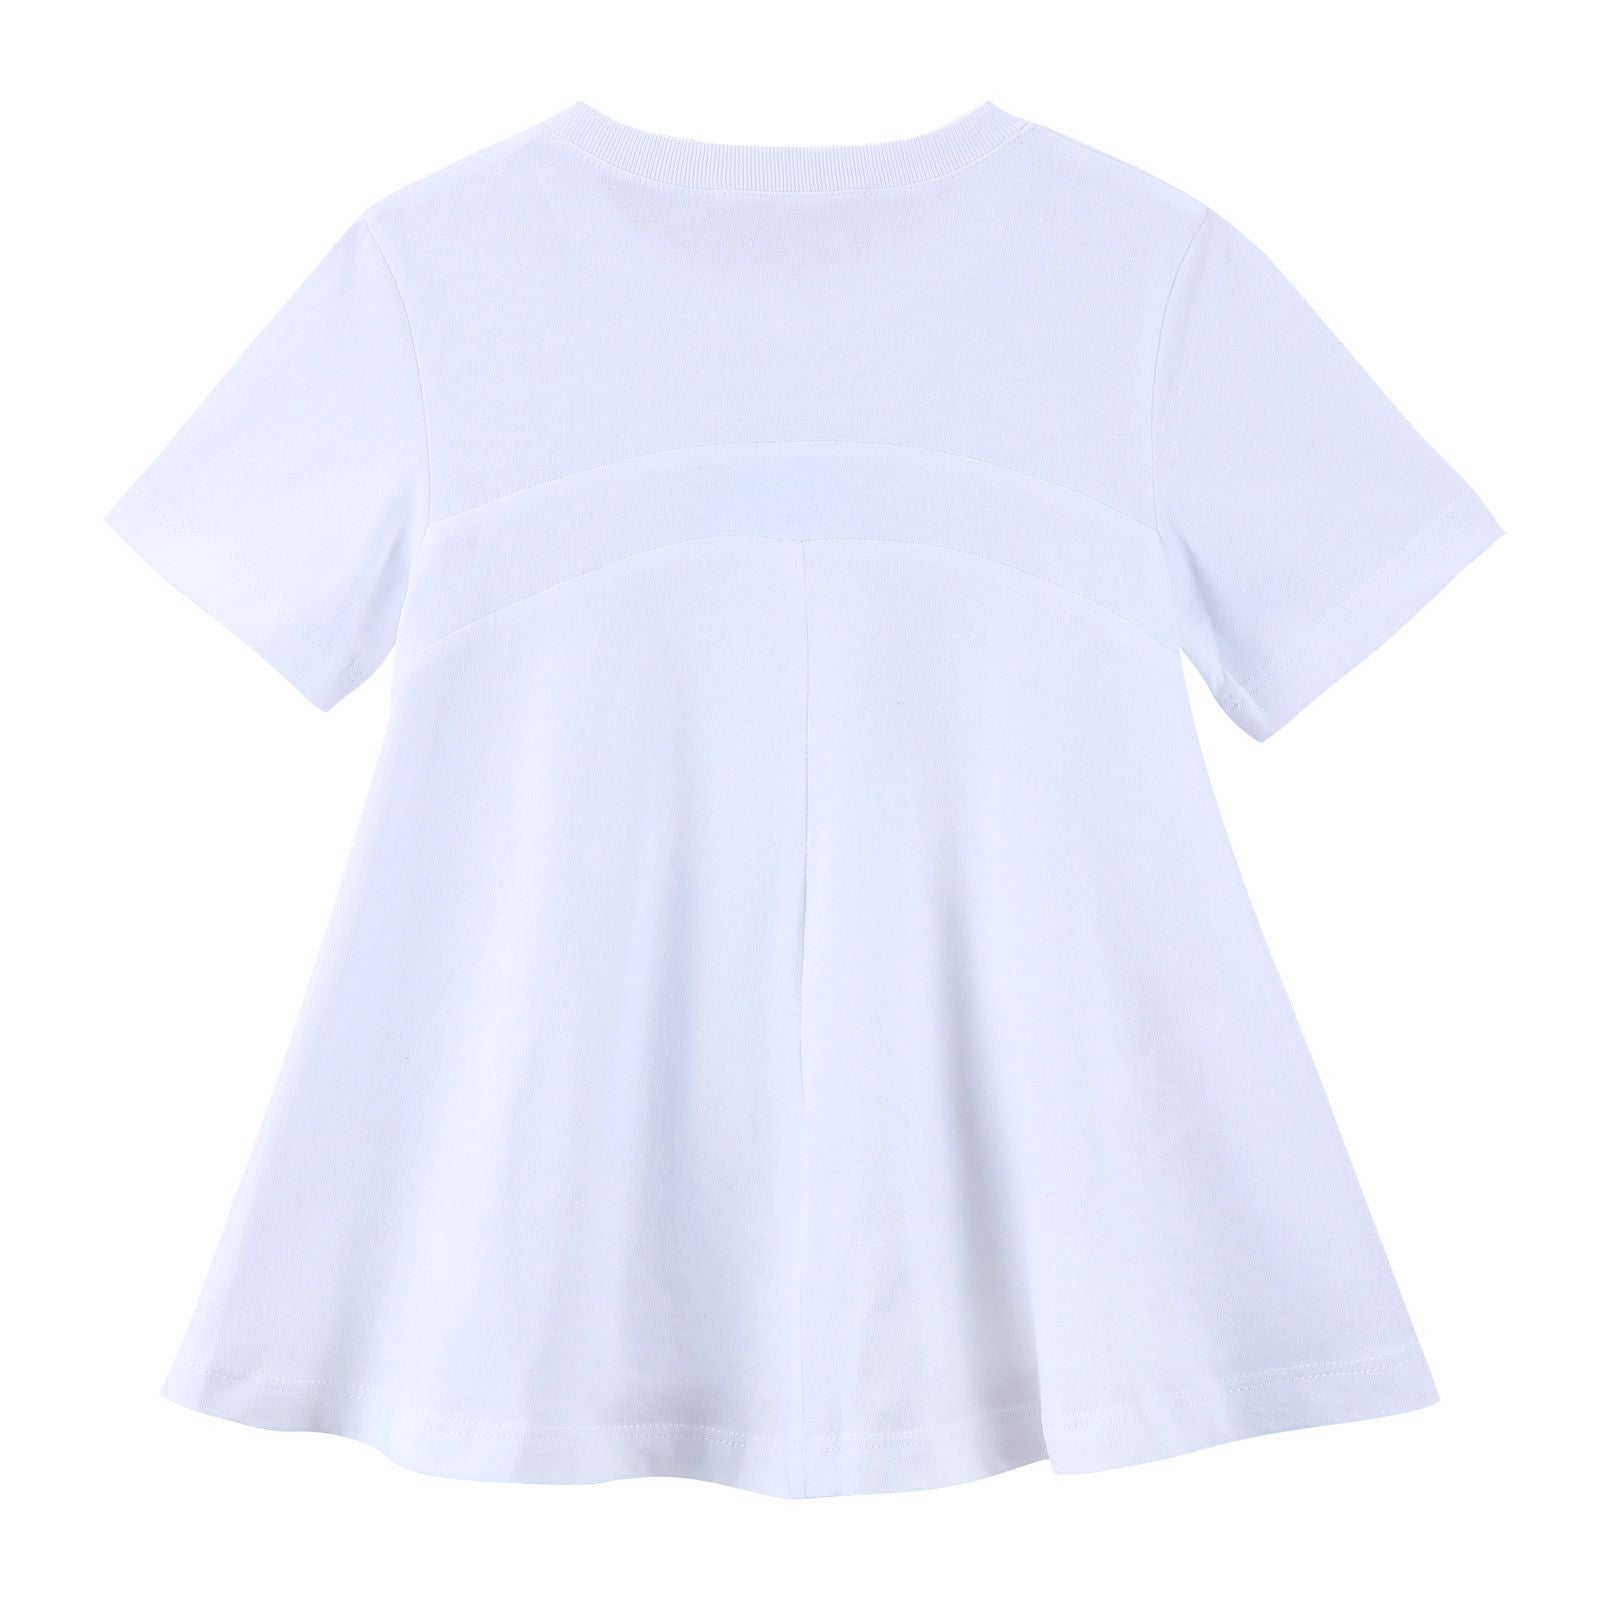 Girls White Cartoon Printed Cotton T-Shirt - CÉMAROSE | Children's Fashion Store - 2